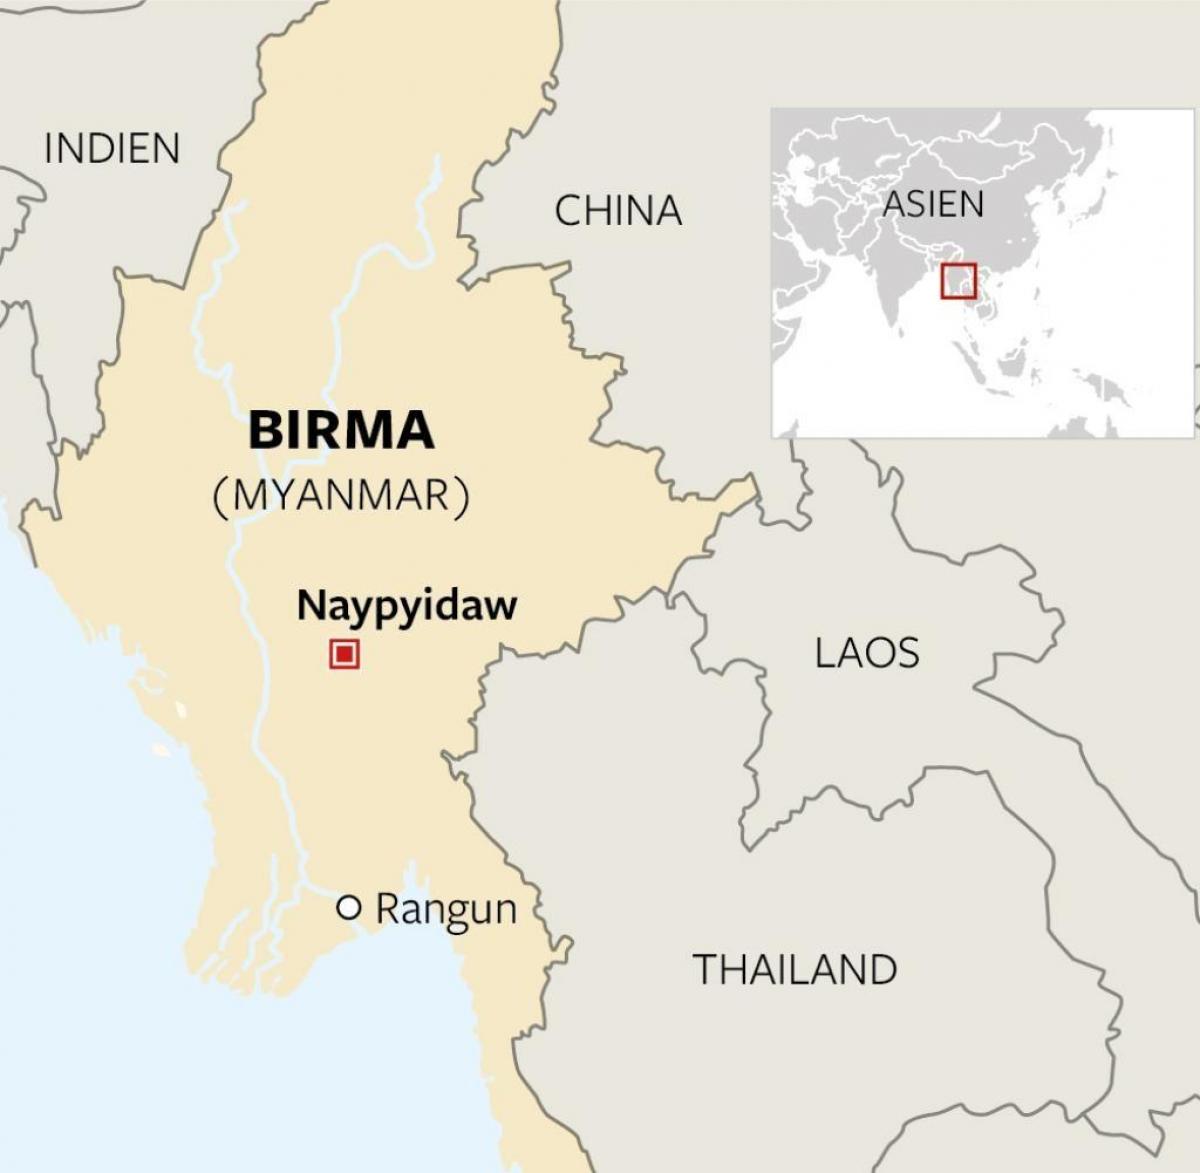 Burma Location On World Map Locate Myanmar On World Map South